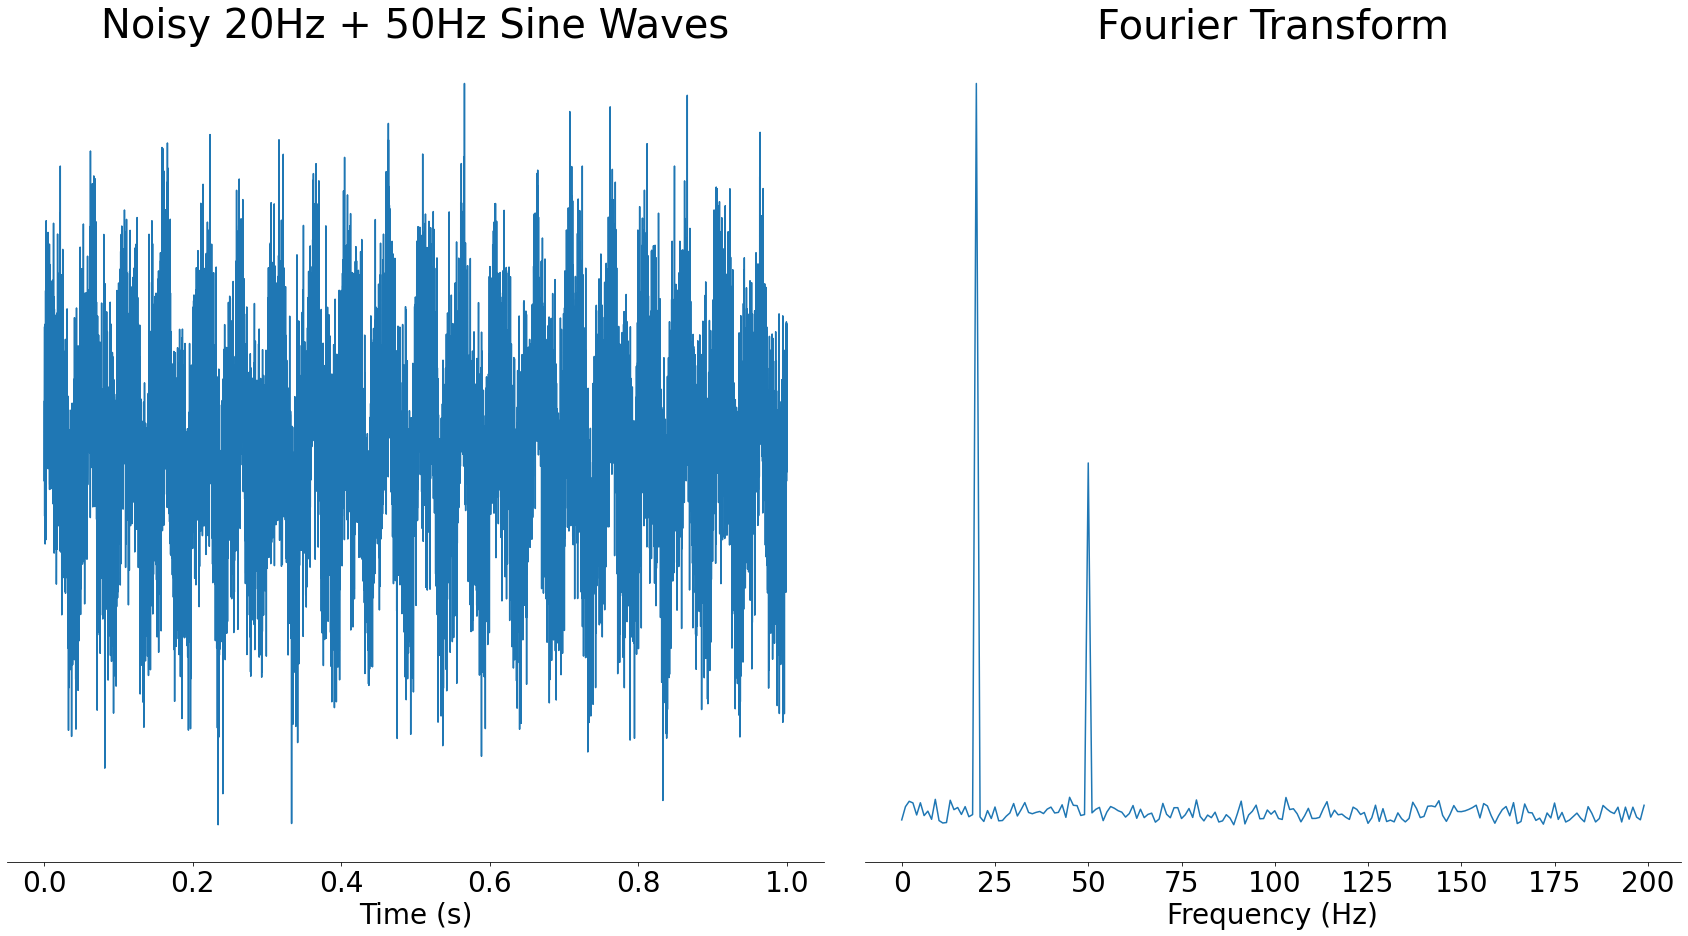 Fourier transform of a noisy signal